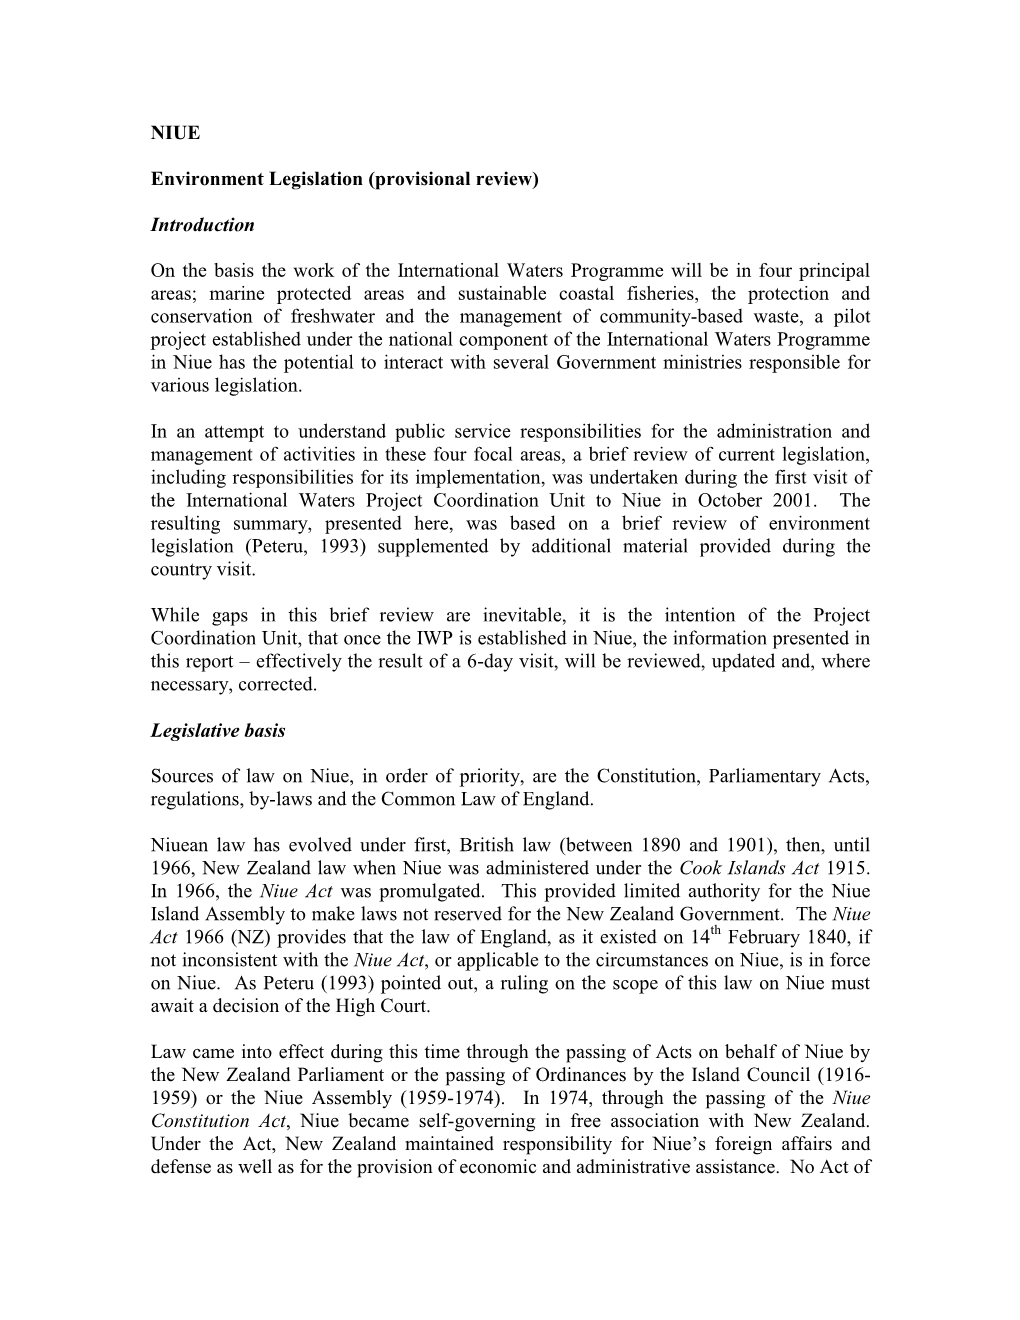 NIUE Environment Legislation (Provisional Review)